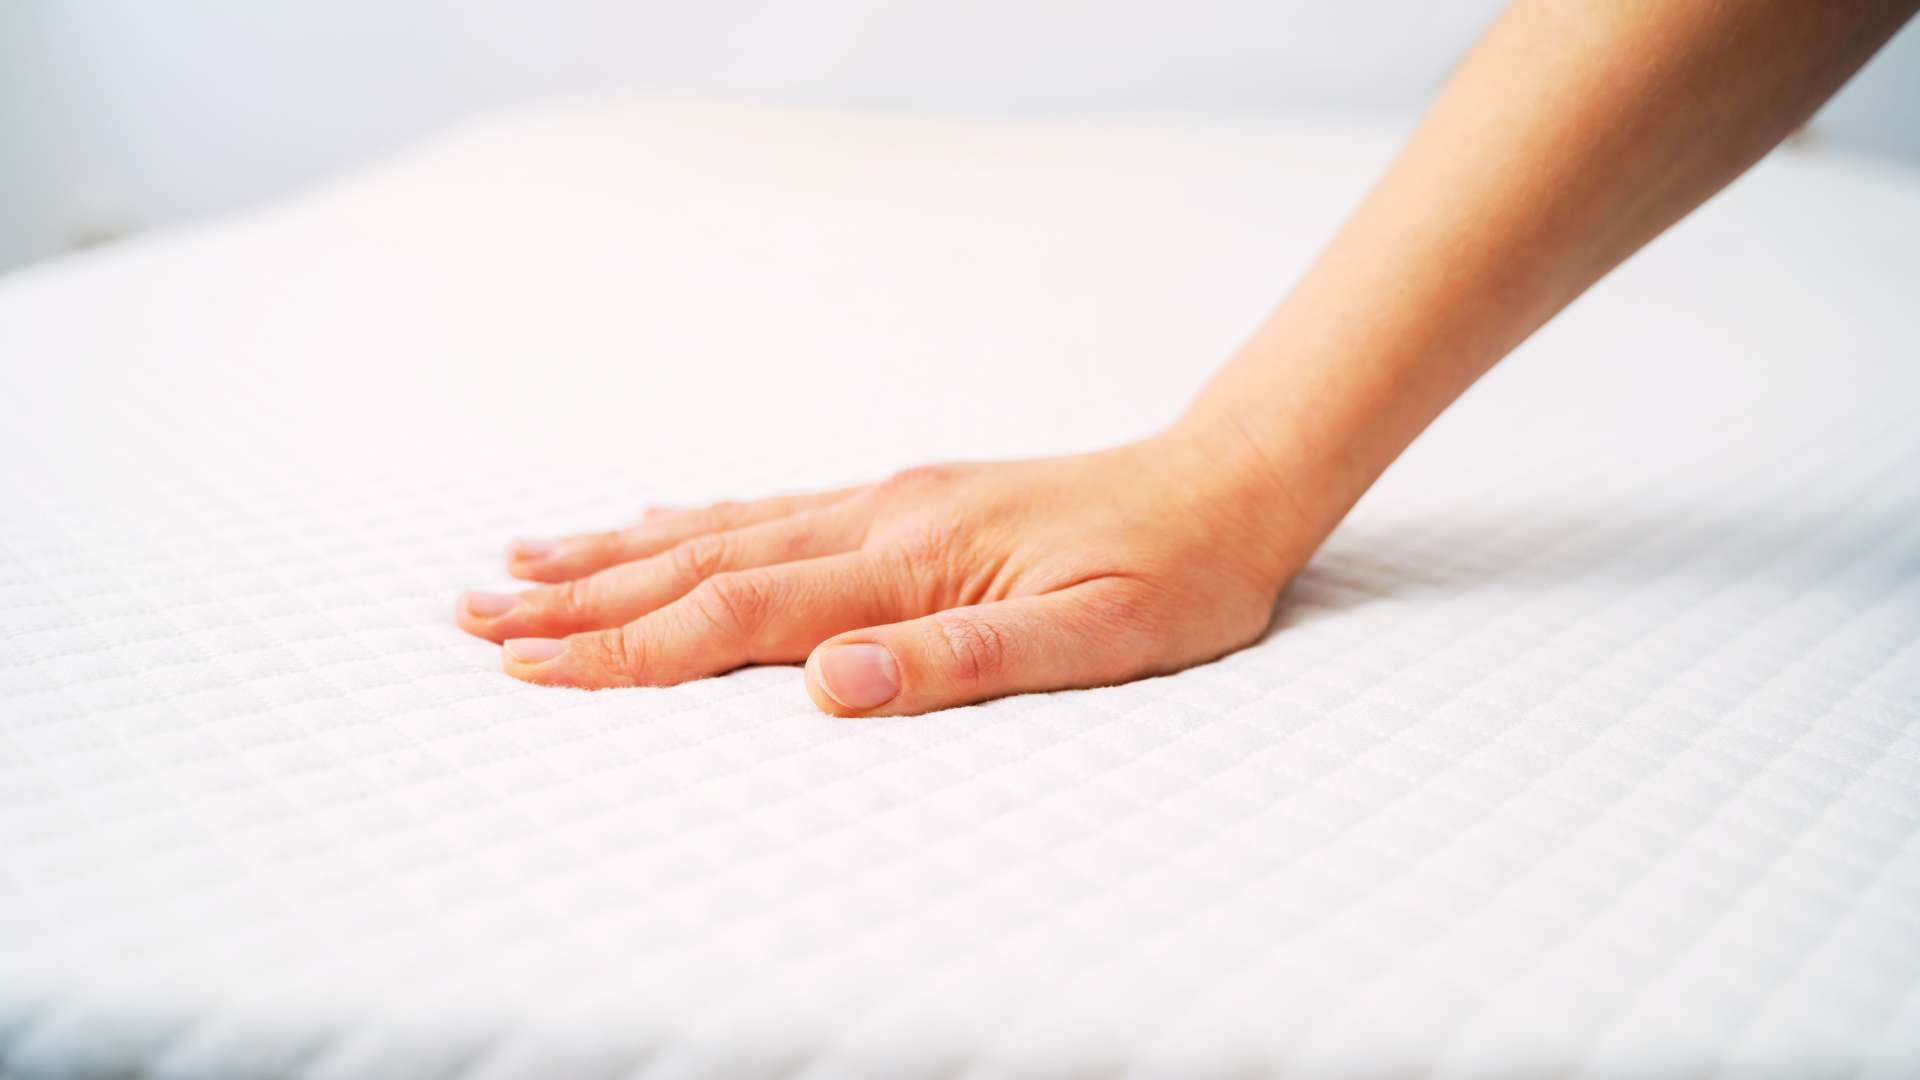 Hand pressing into a custom foam mattress, demonstrating its responsiveness.